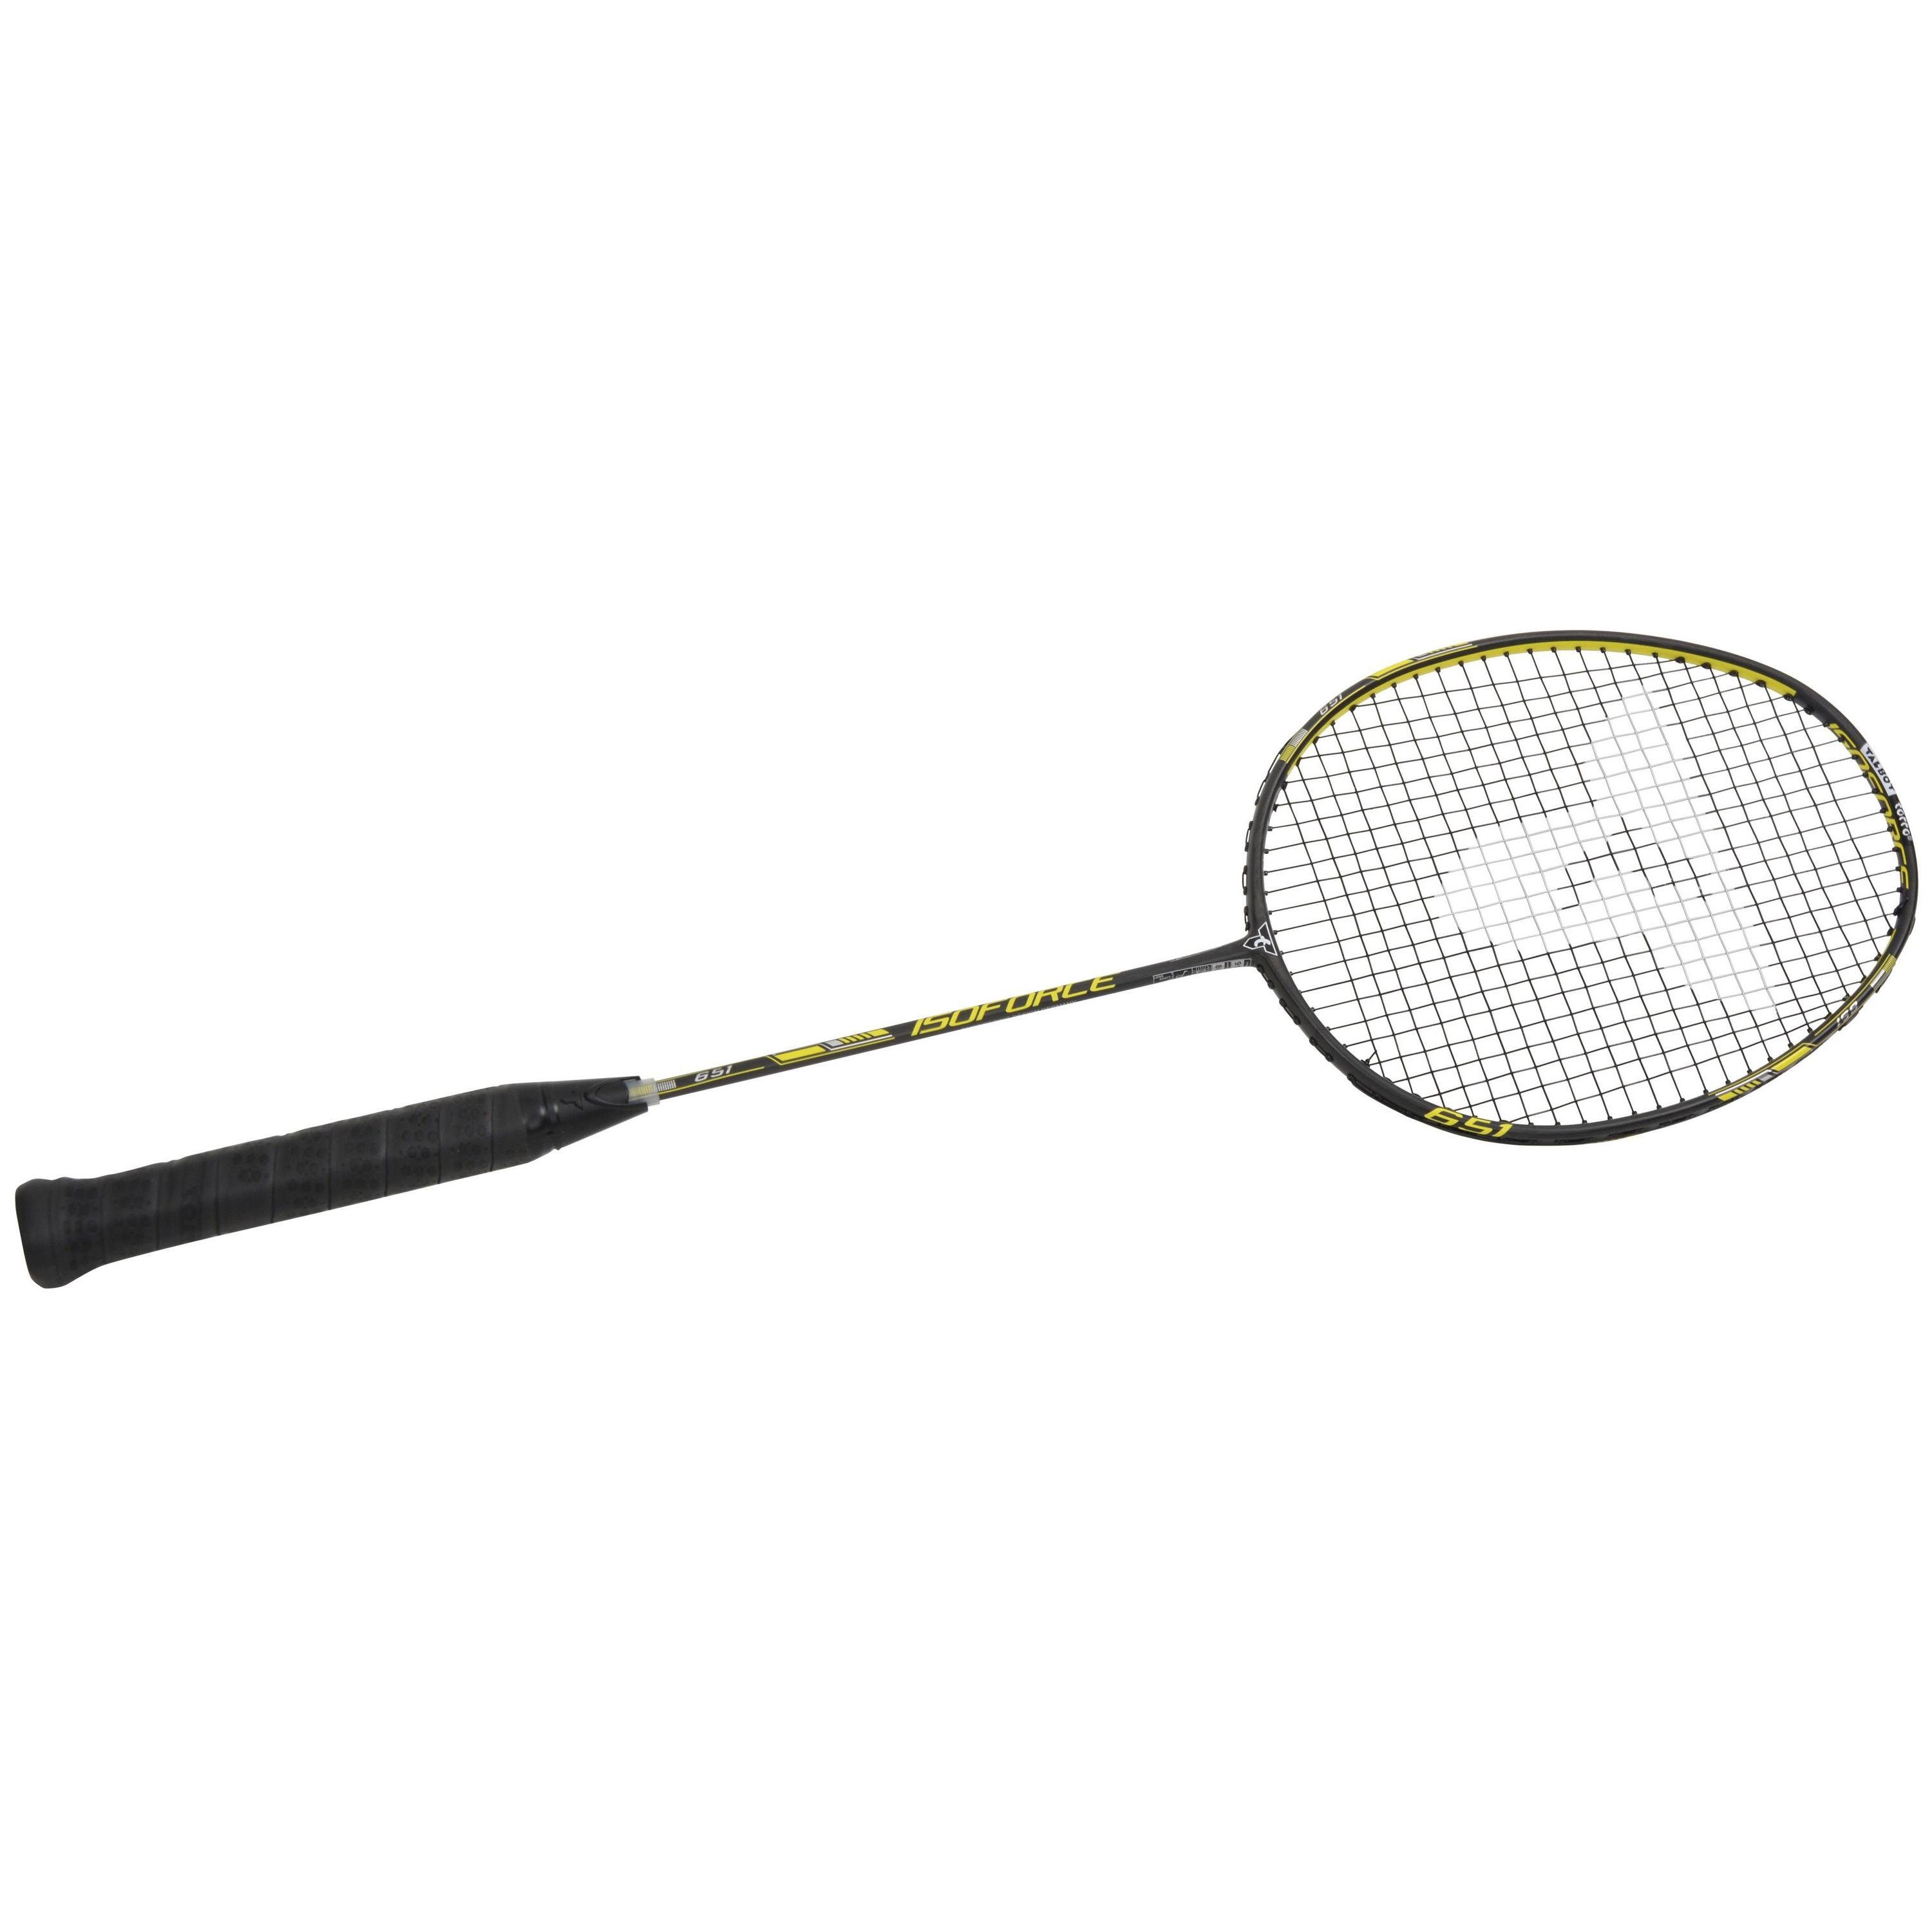 Badmintonschläger ISOFORCE 651 Talbot-Torro